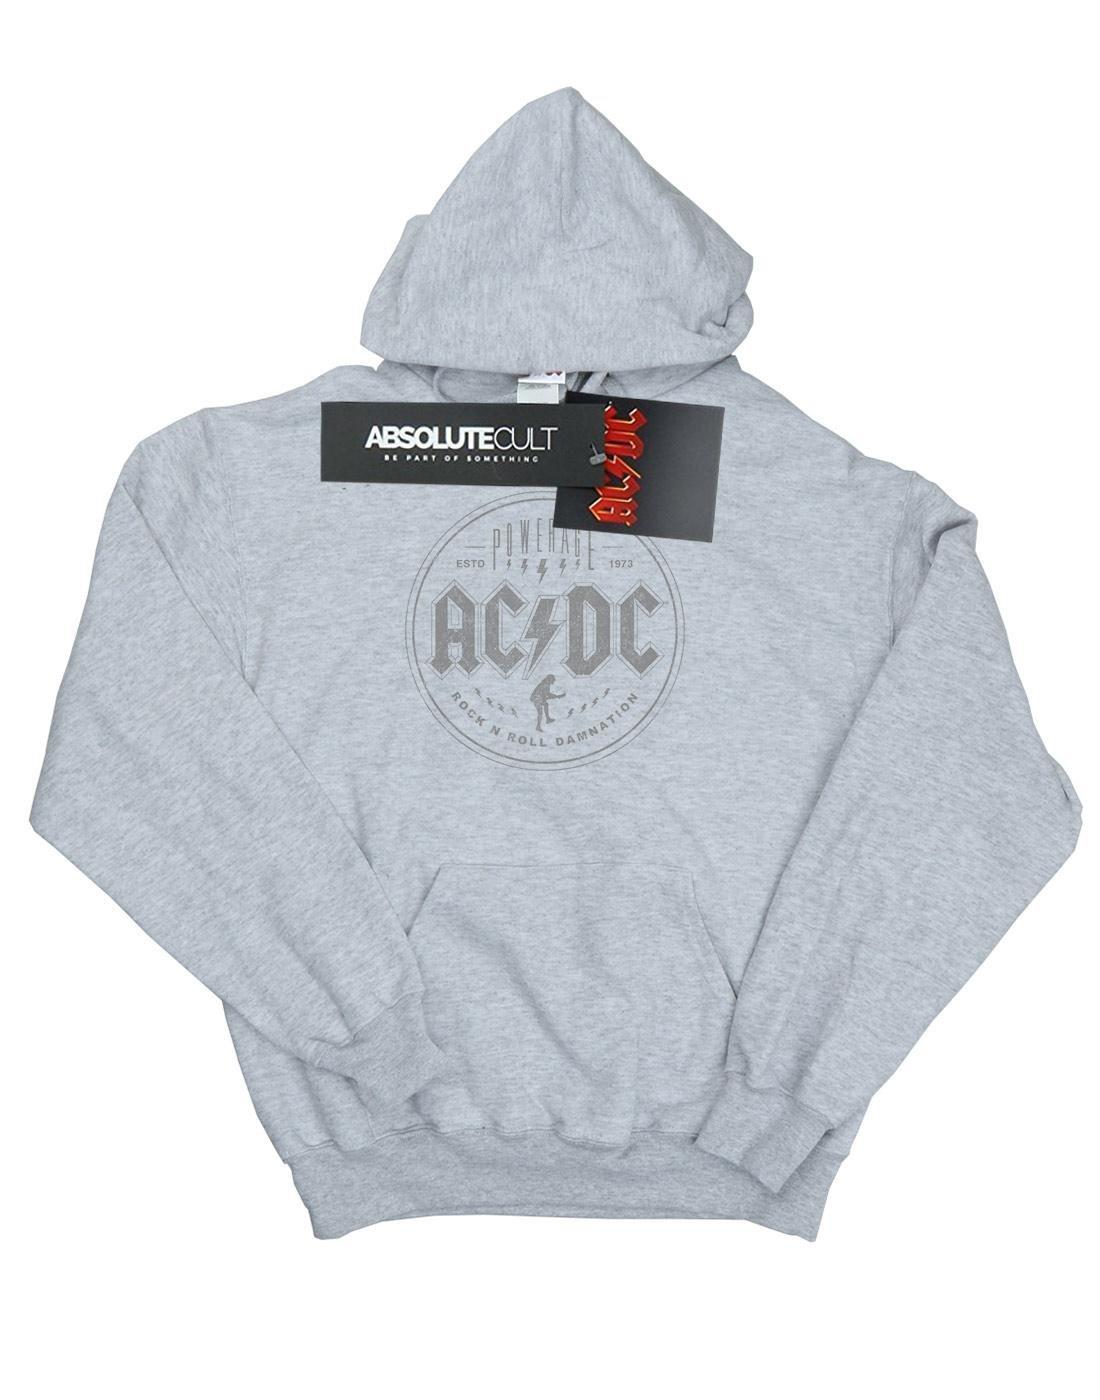 AC/DC  ACDC Rock N Roll Damnation Black Kapuzenpullover 